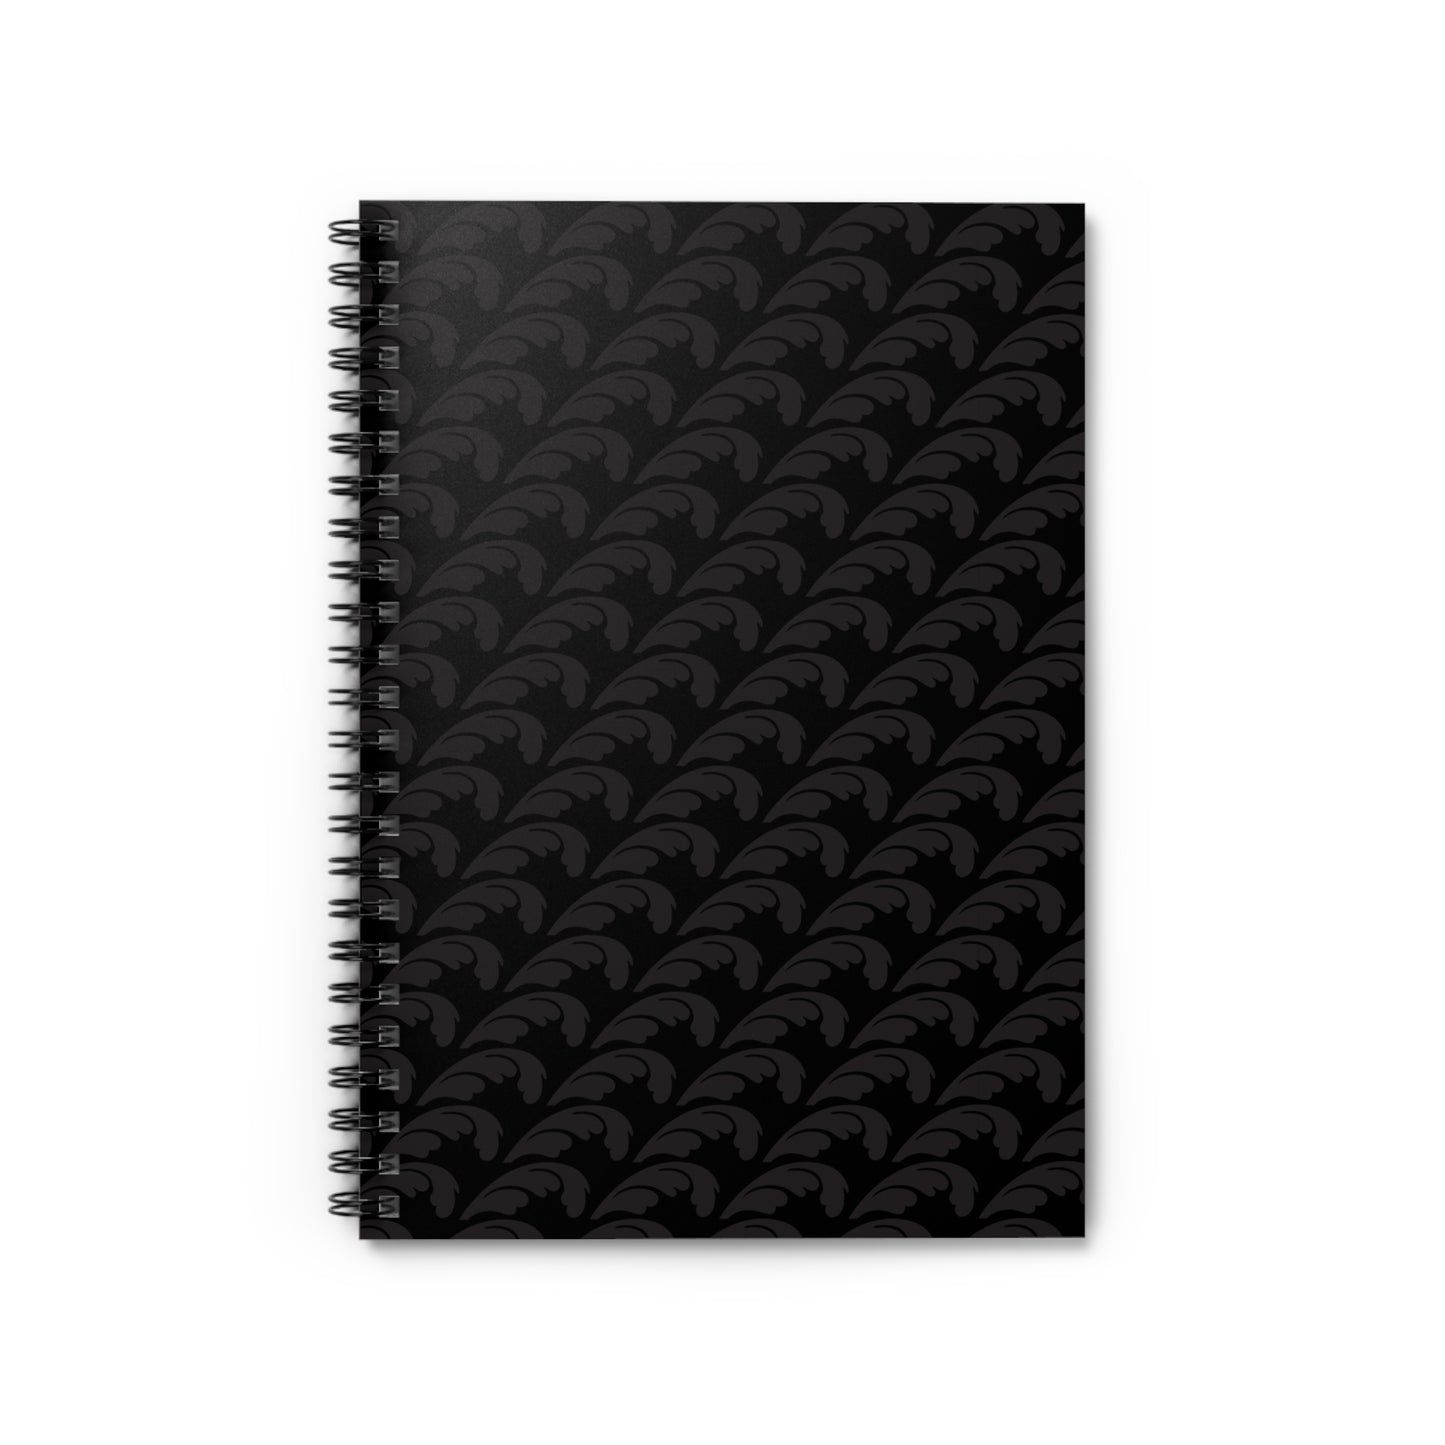 Beautiful Beloved One - Spiral Notebook - Ruled Line - black/black